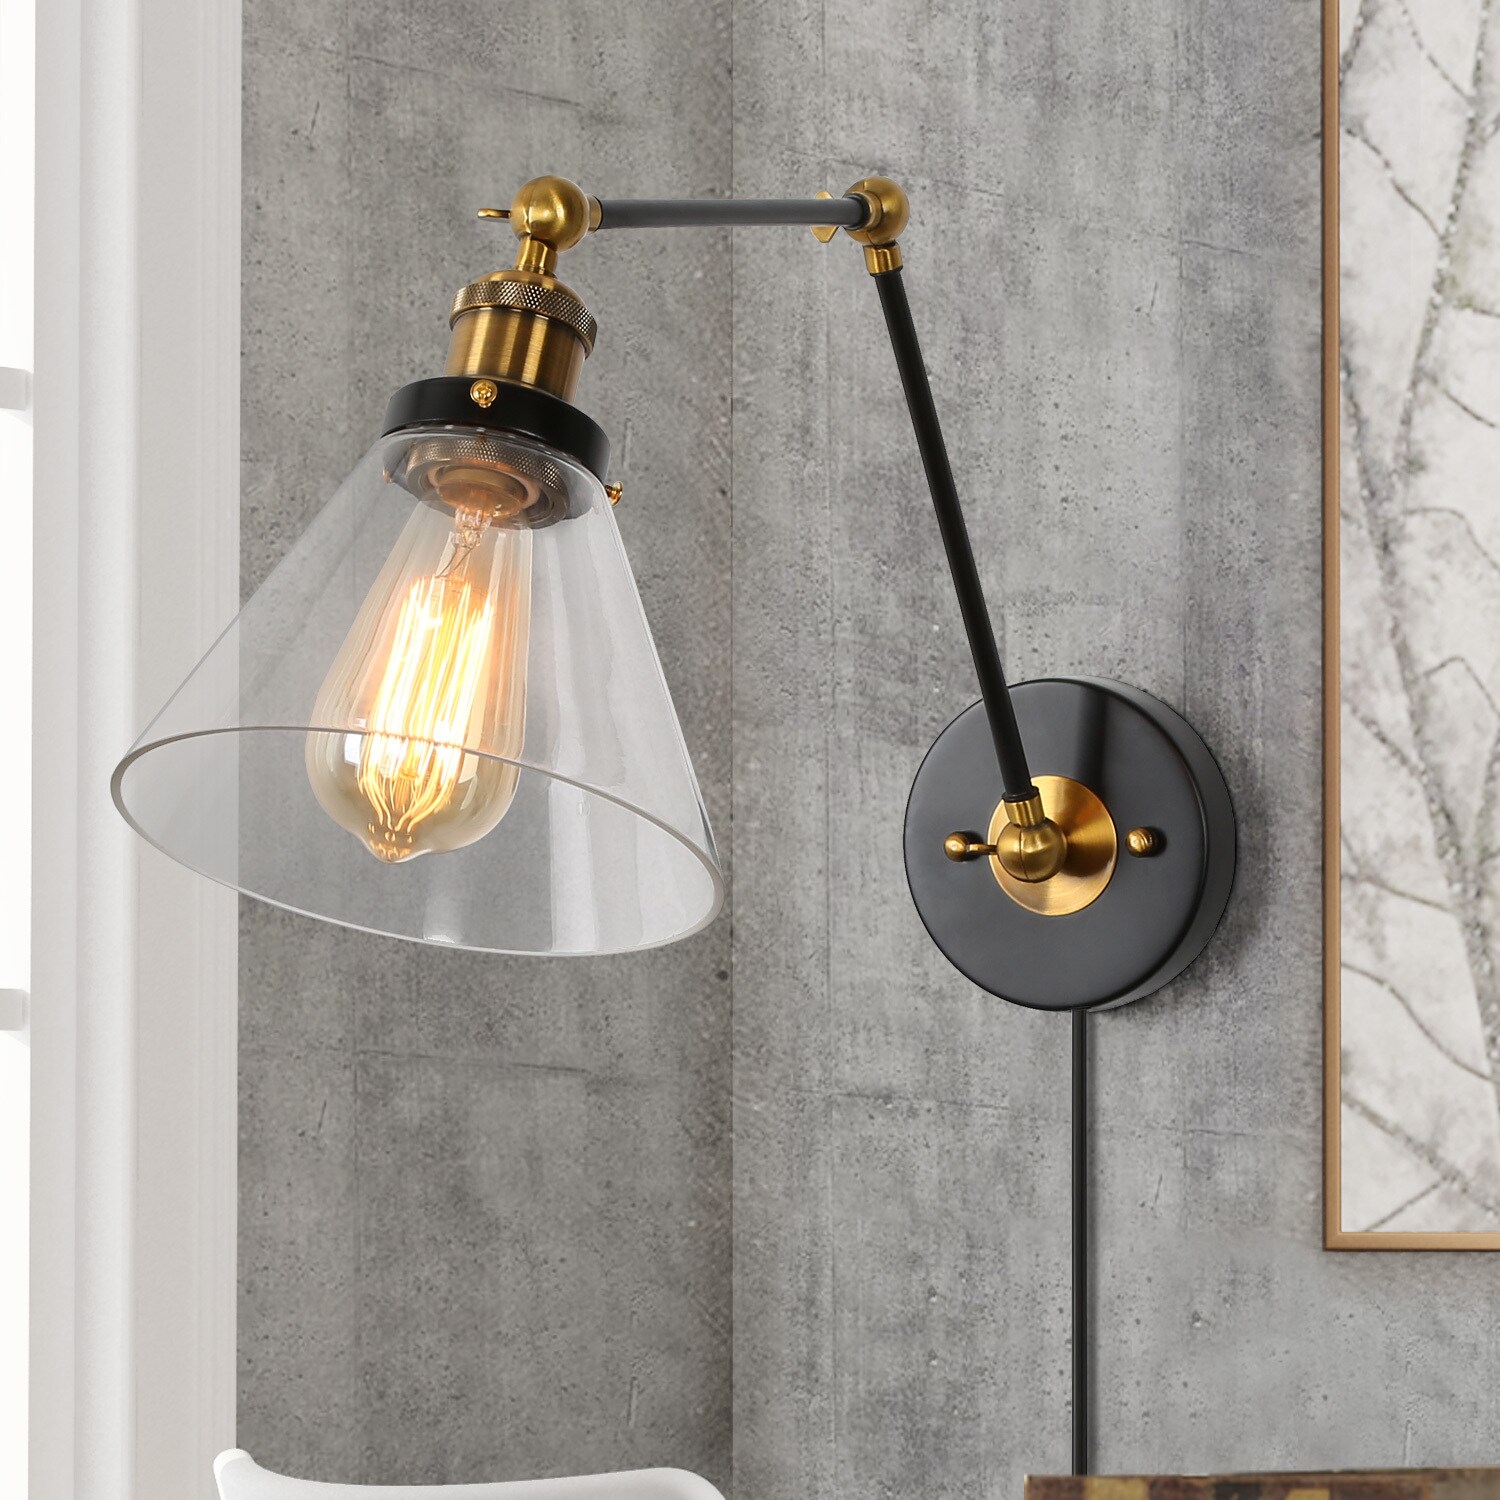 Wall lamp with LED Bulb Modern PVC+Wood Wall Lights Sconces Aisle Bedside light 